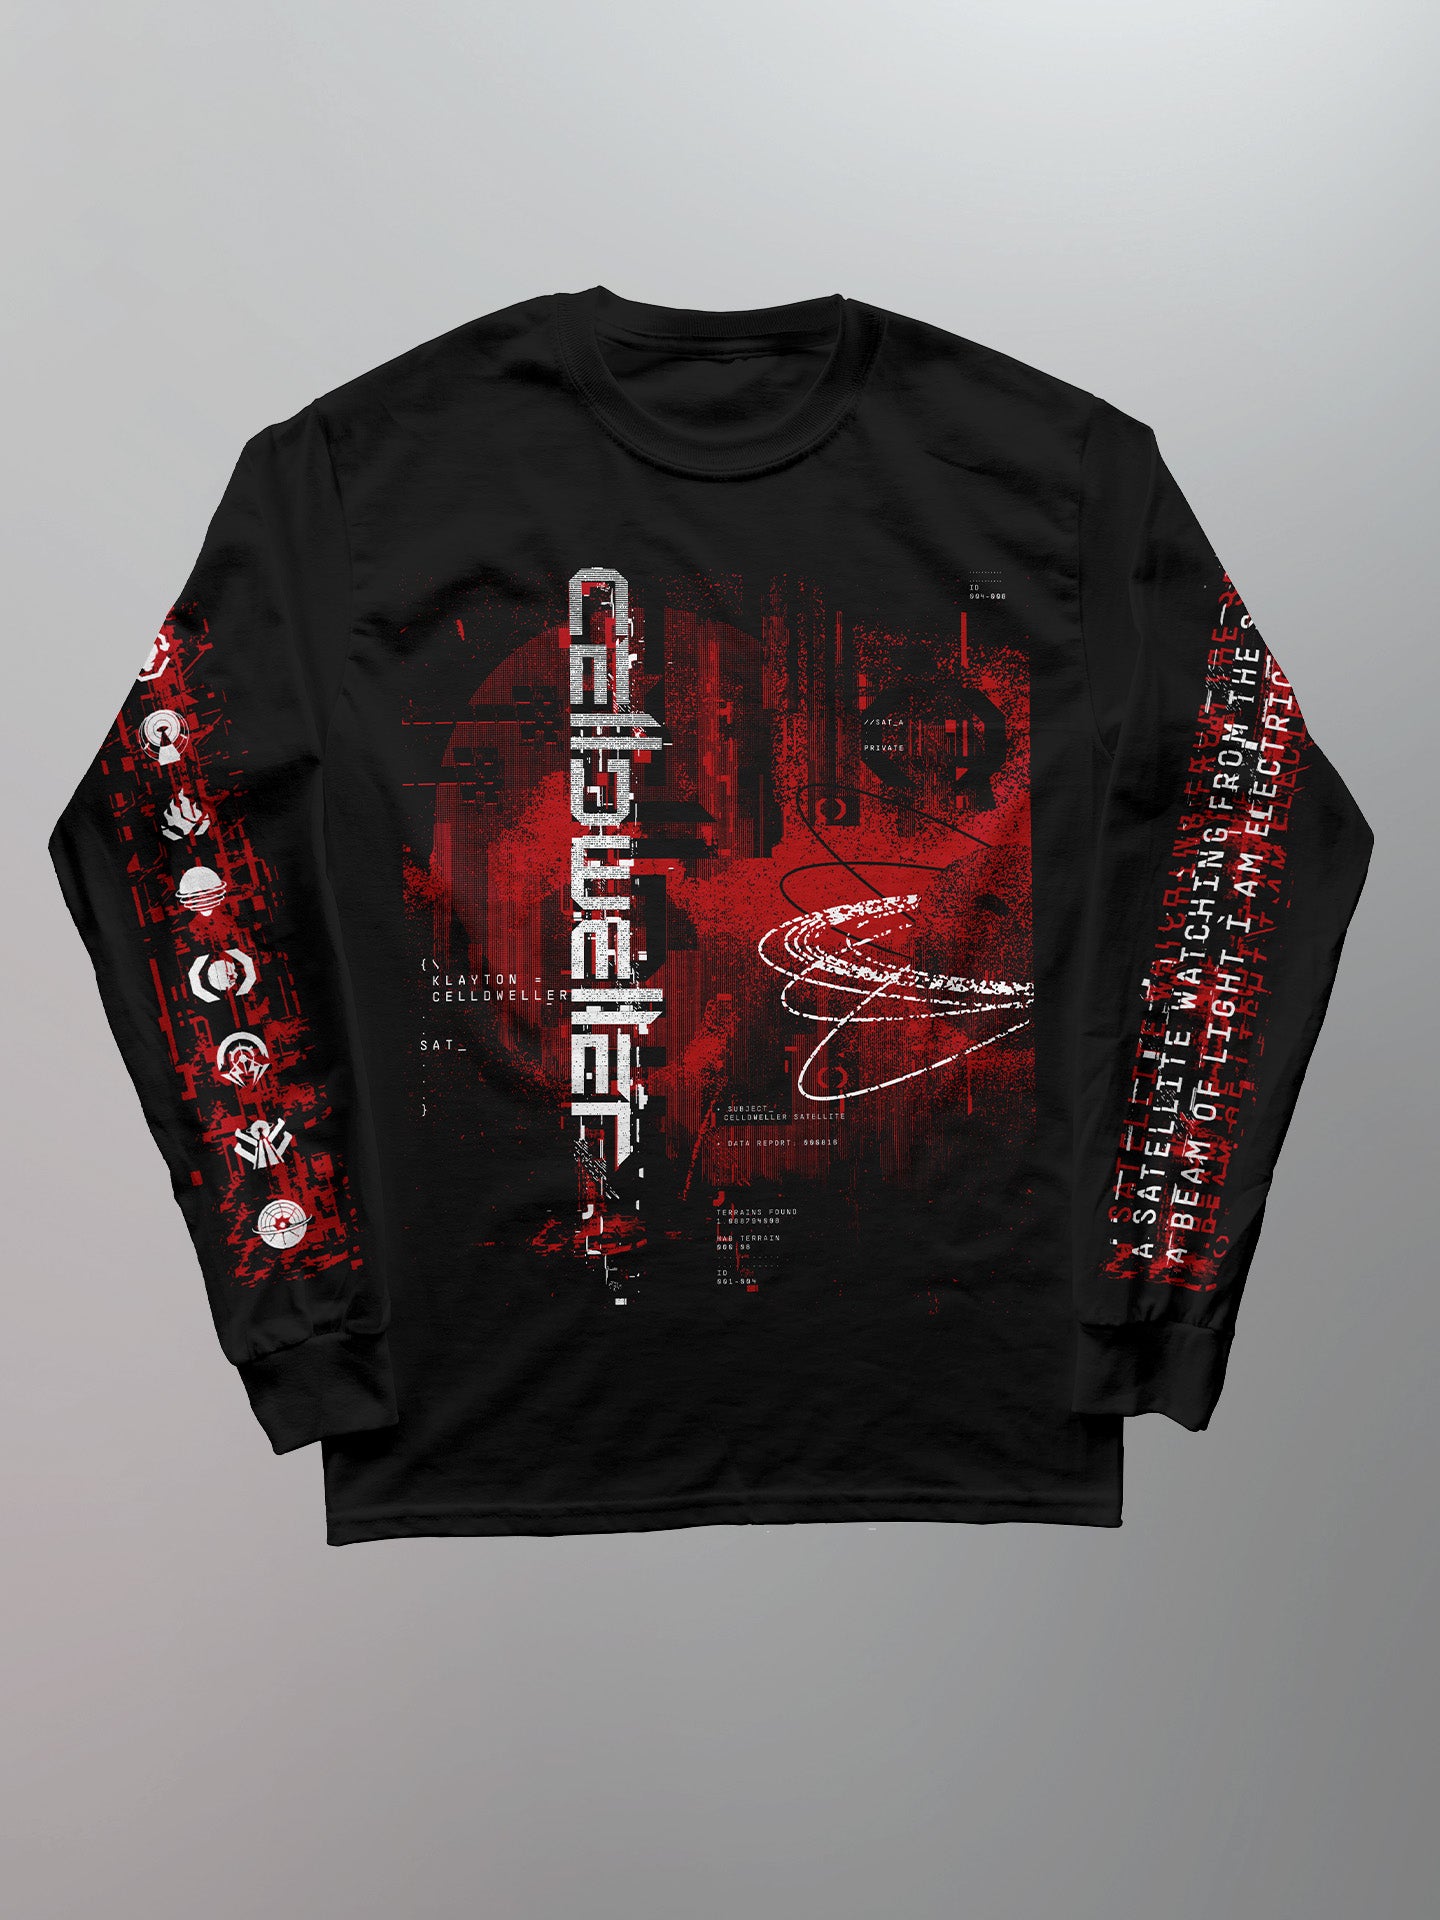 Celldweller - Satellites TEK L/S Shirt